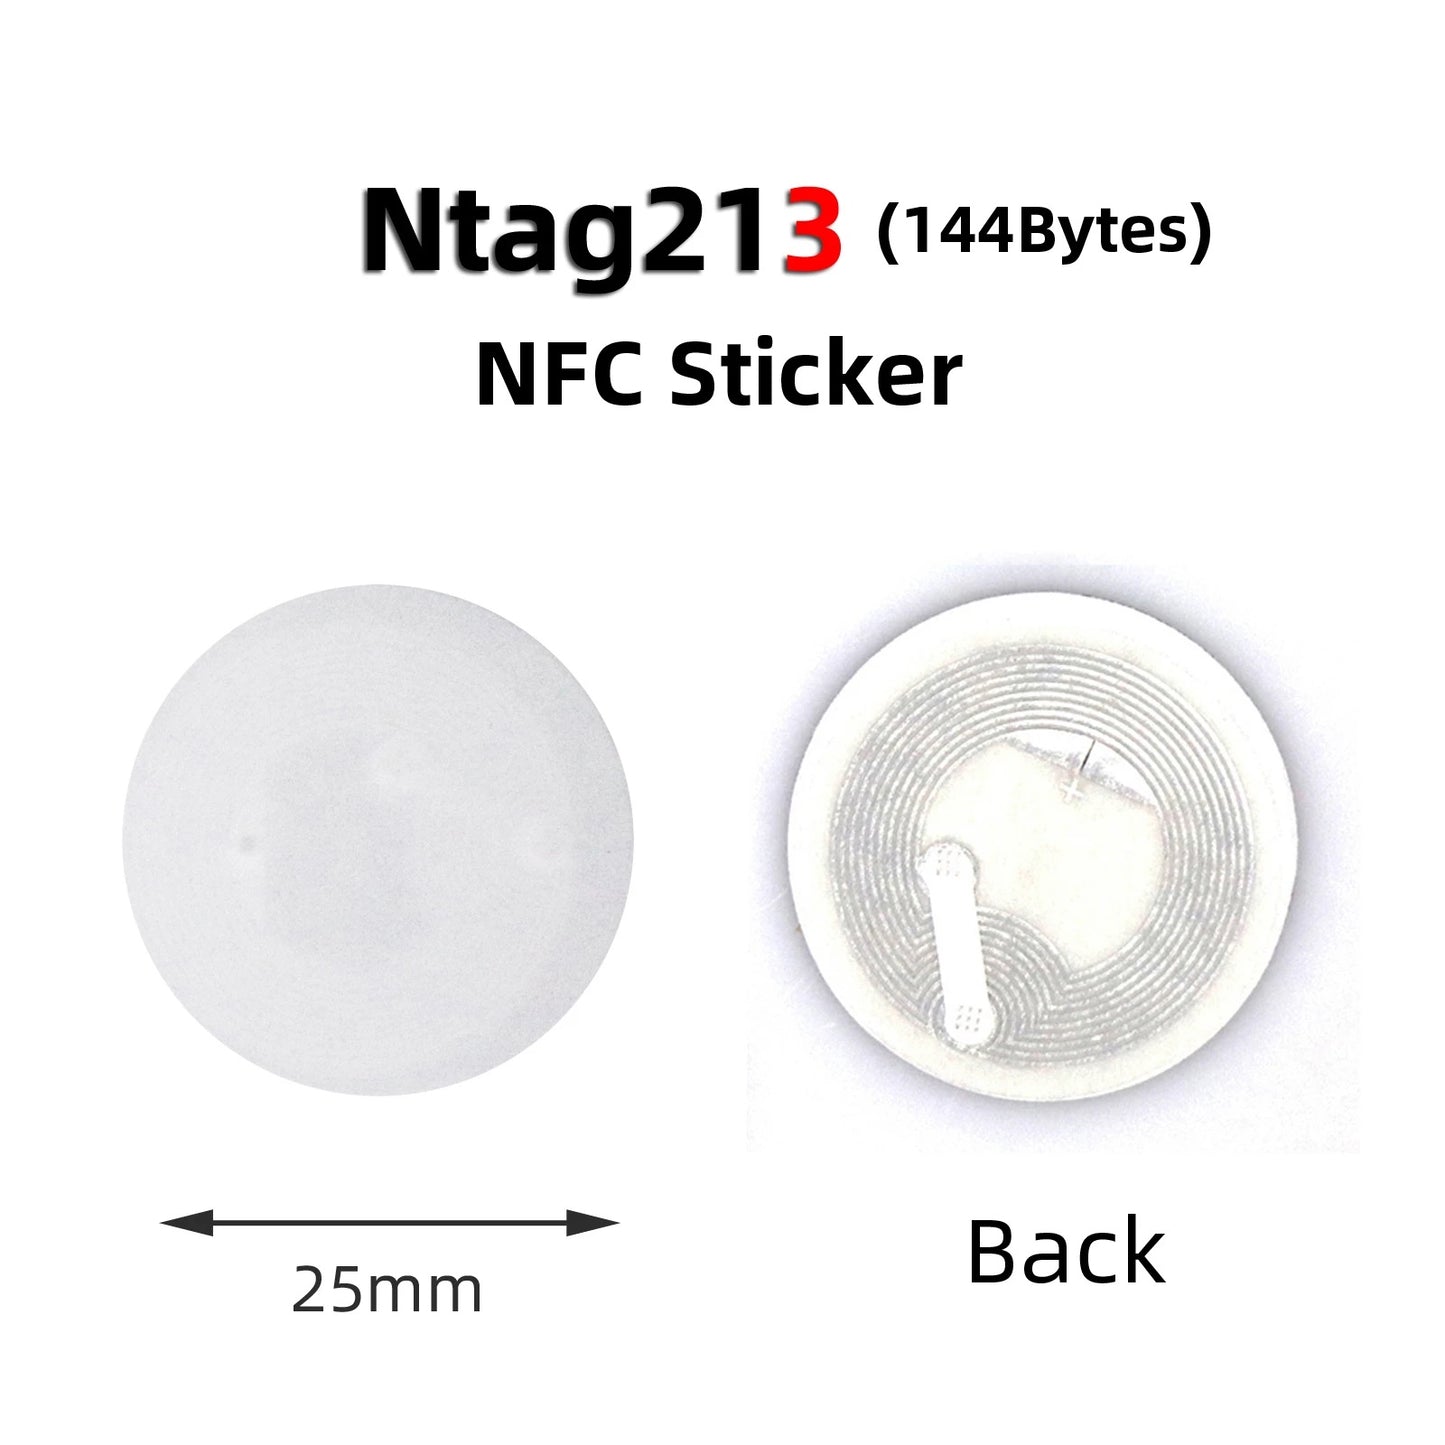 Sticker - Etiqueta NFC / NTAG213, 144 bytes